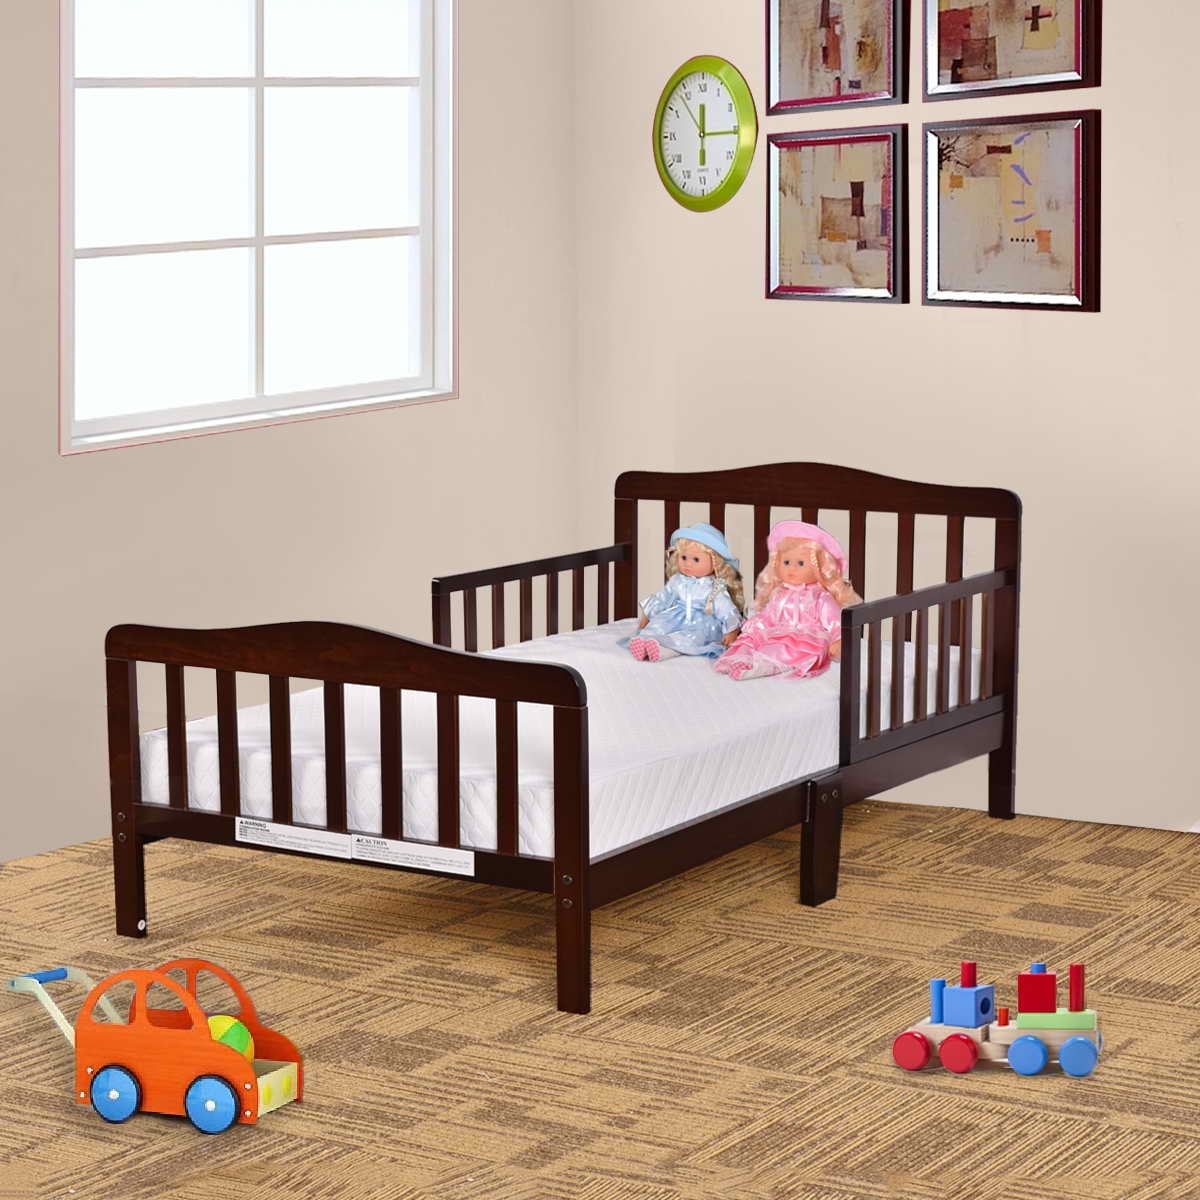 Costway Baby Toddler Bed Kids children Wood Furniture w ...